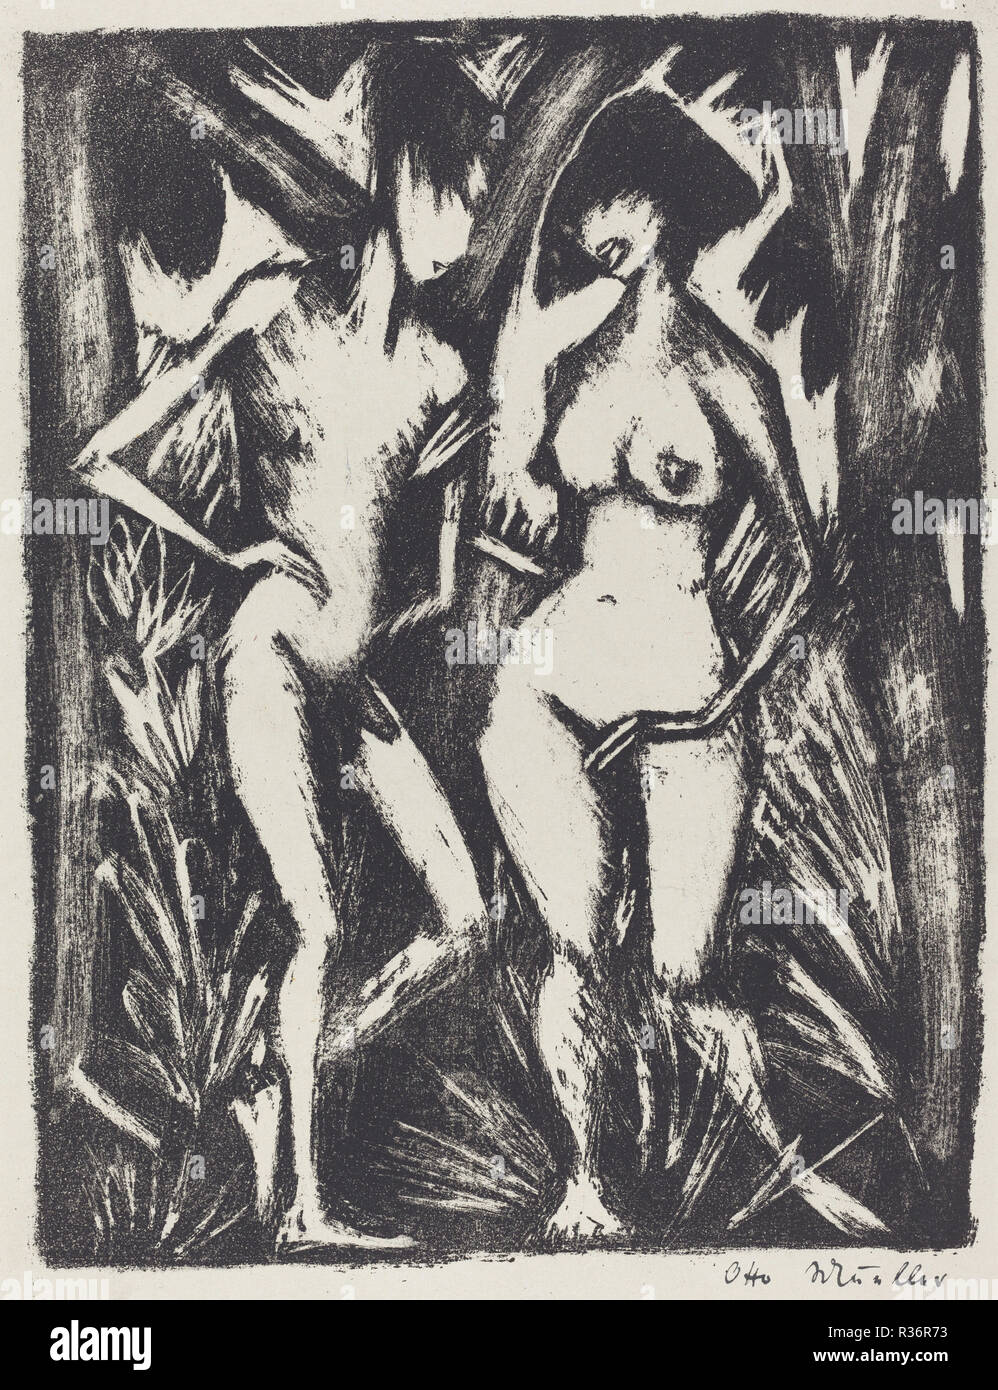 Adam and Eve (Adam und Eva). Dated: 1920/1923. Medium: lithograph. Museum: National Gallery of Art, Washington DC. Author: Otto Müller. Stock Photo